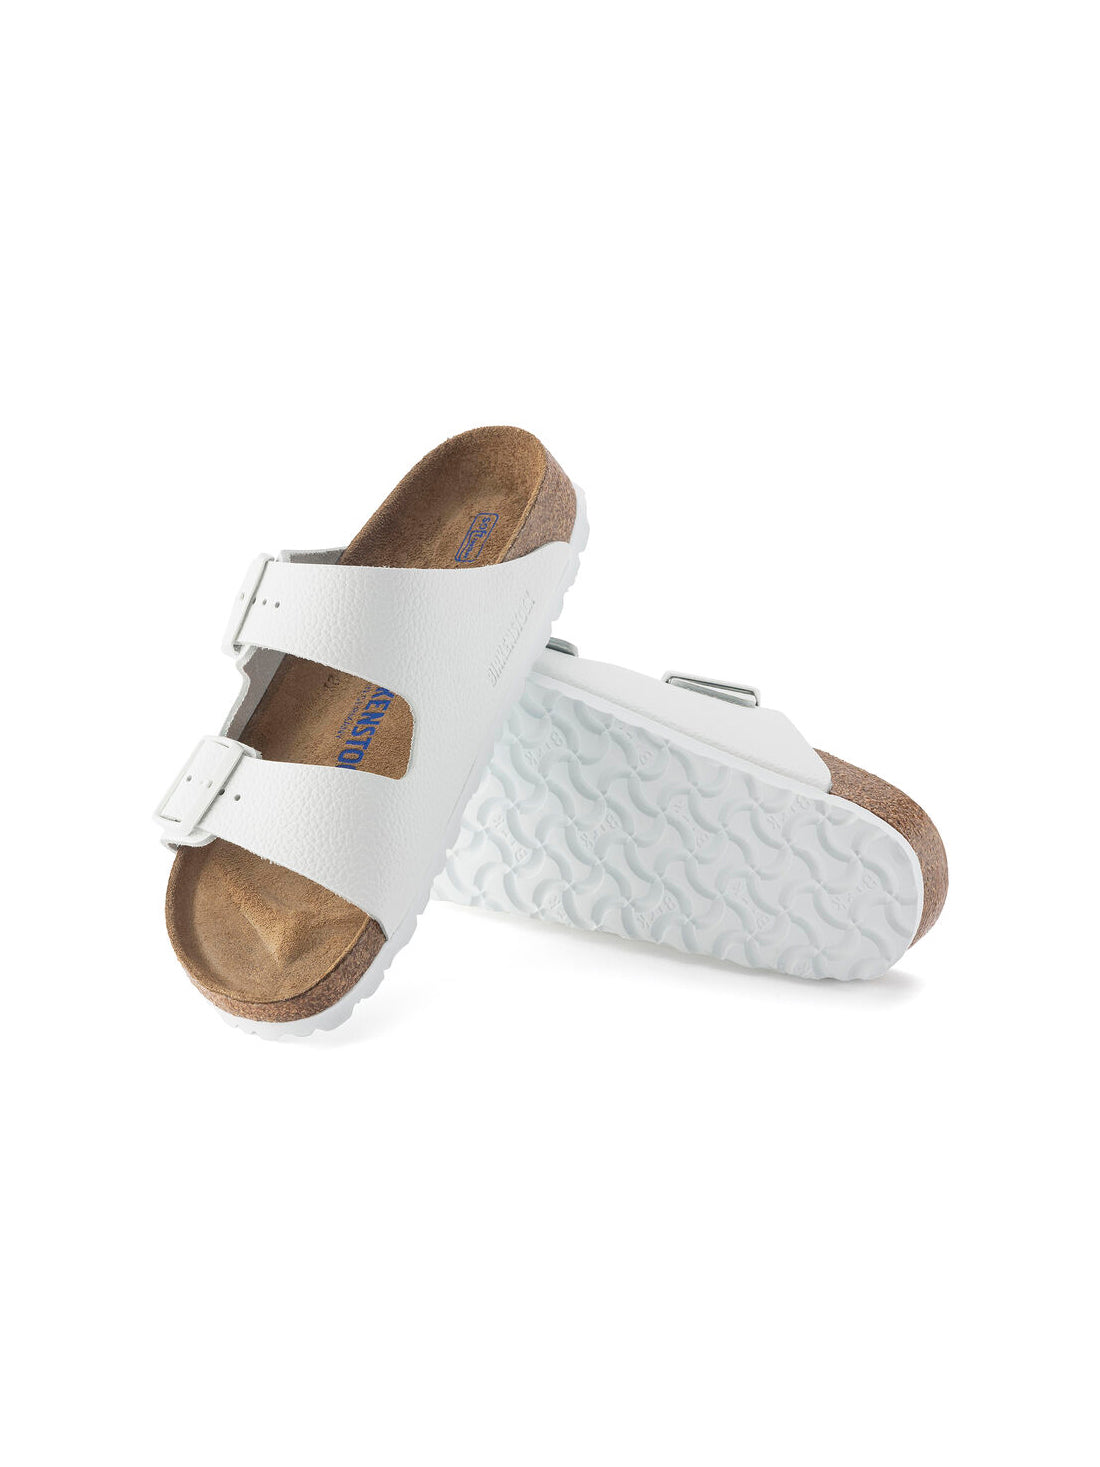 birkenstock arizona soft footbed sandal in white leather narrow